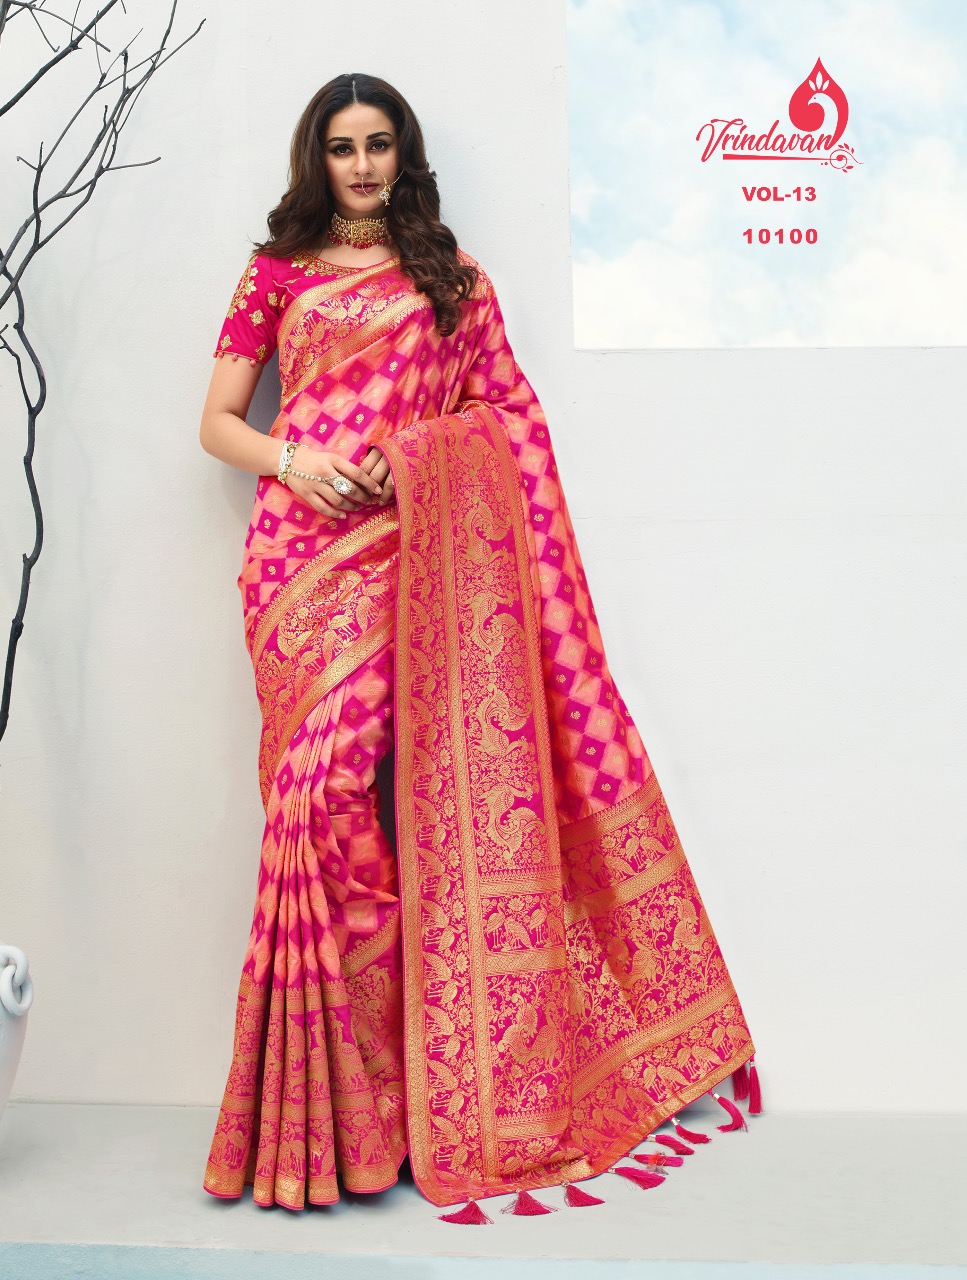 Royal Presents Vrindavan Vol-13 Wedding Wear Banarasi Silk Sarees With Heavy Blouse Collection At Wholesale Price